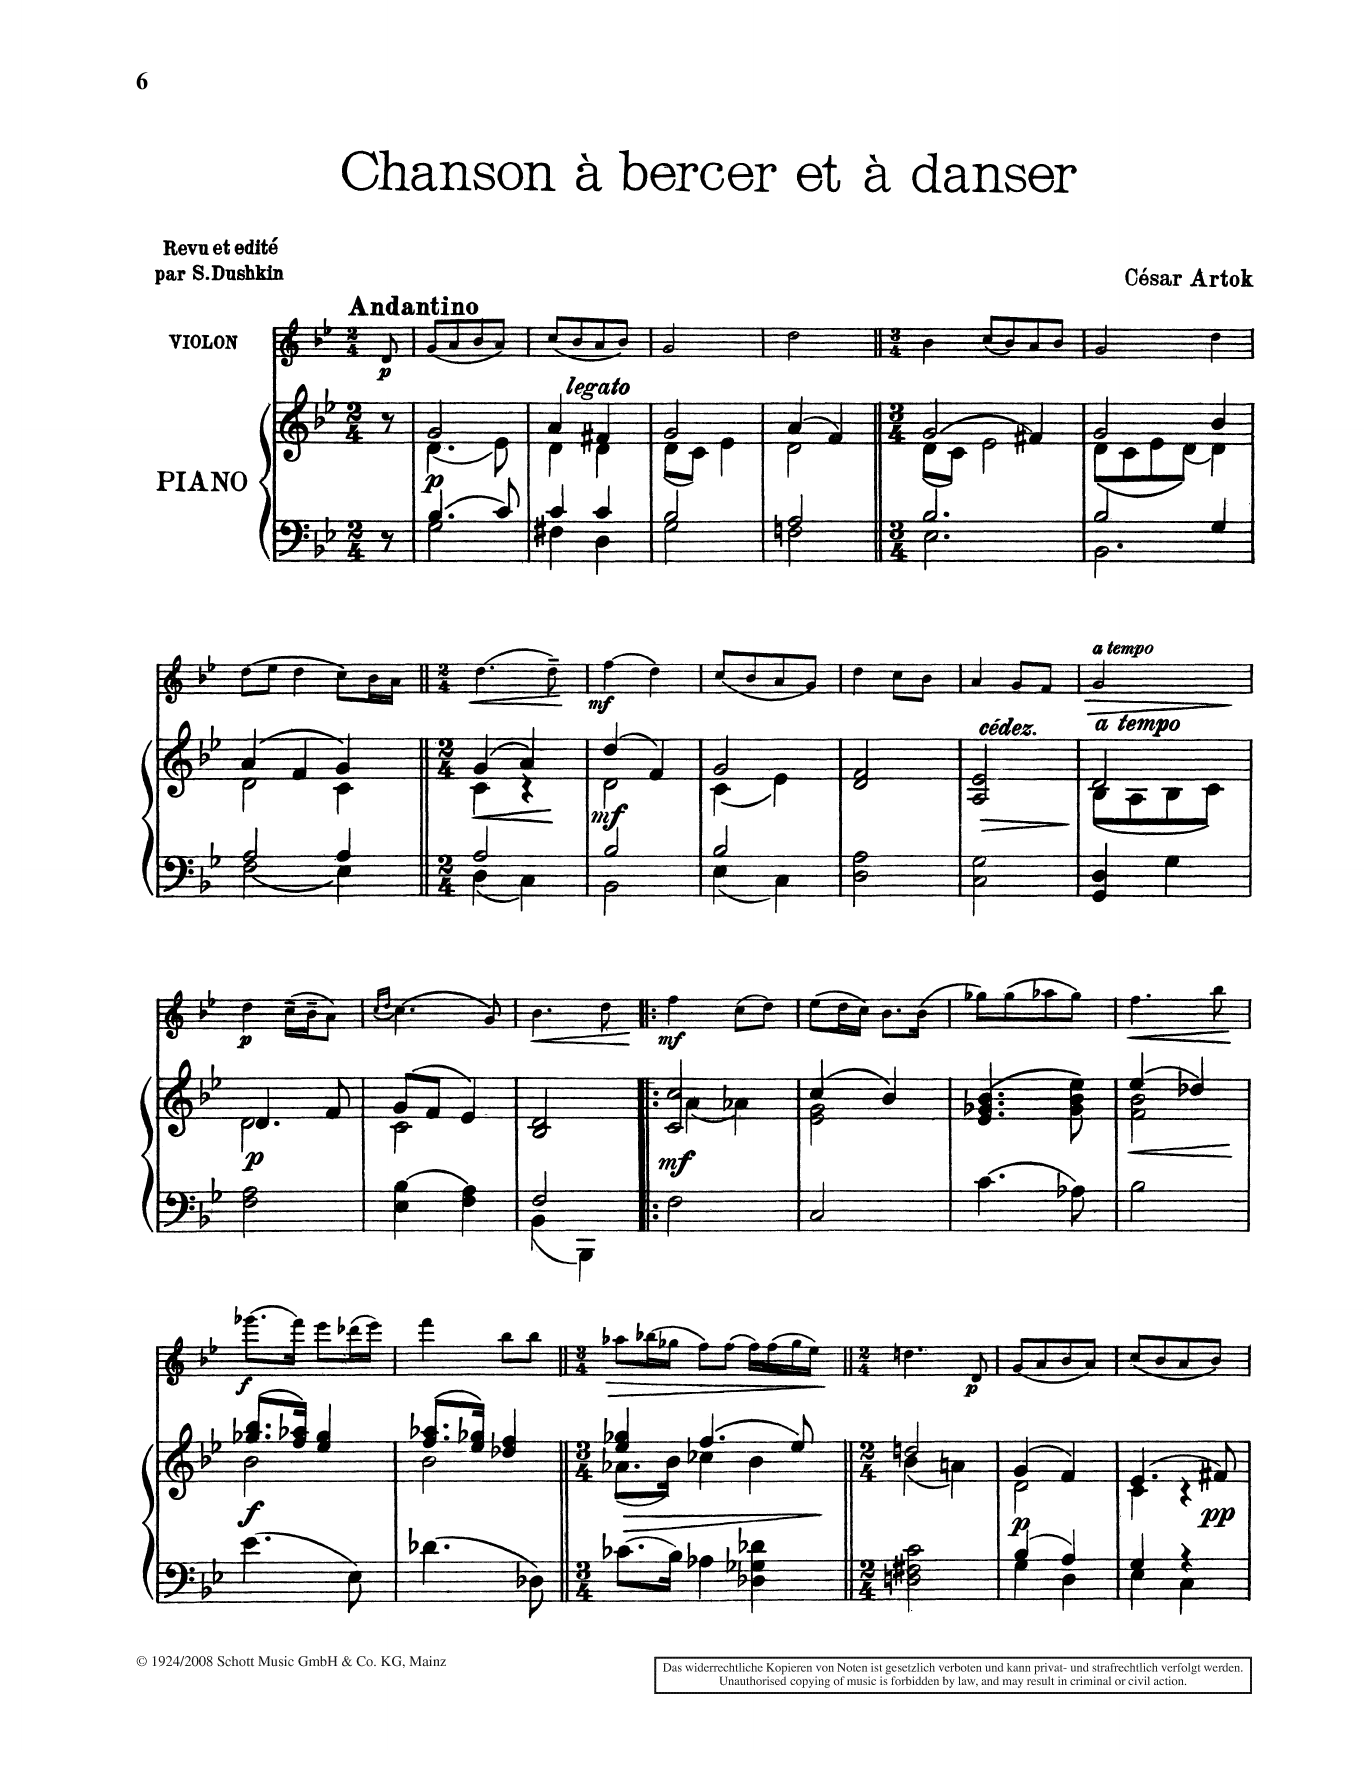 Download César Artok Chanson à bercer et à danser Sheet Music and learn how to play String Solo PDF digital score in minutes